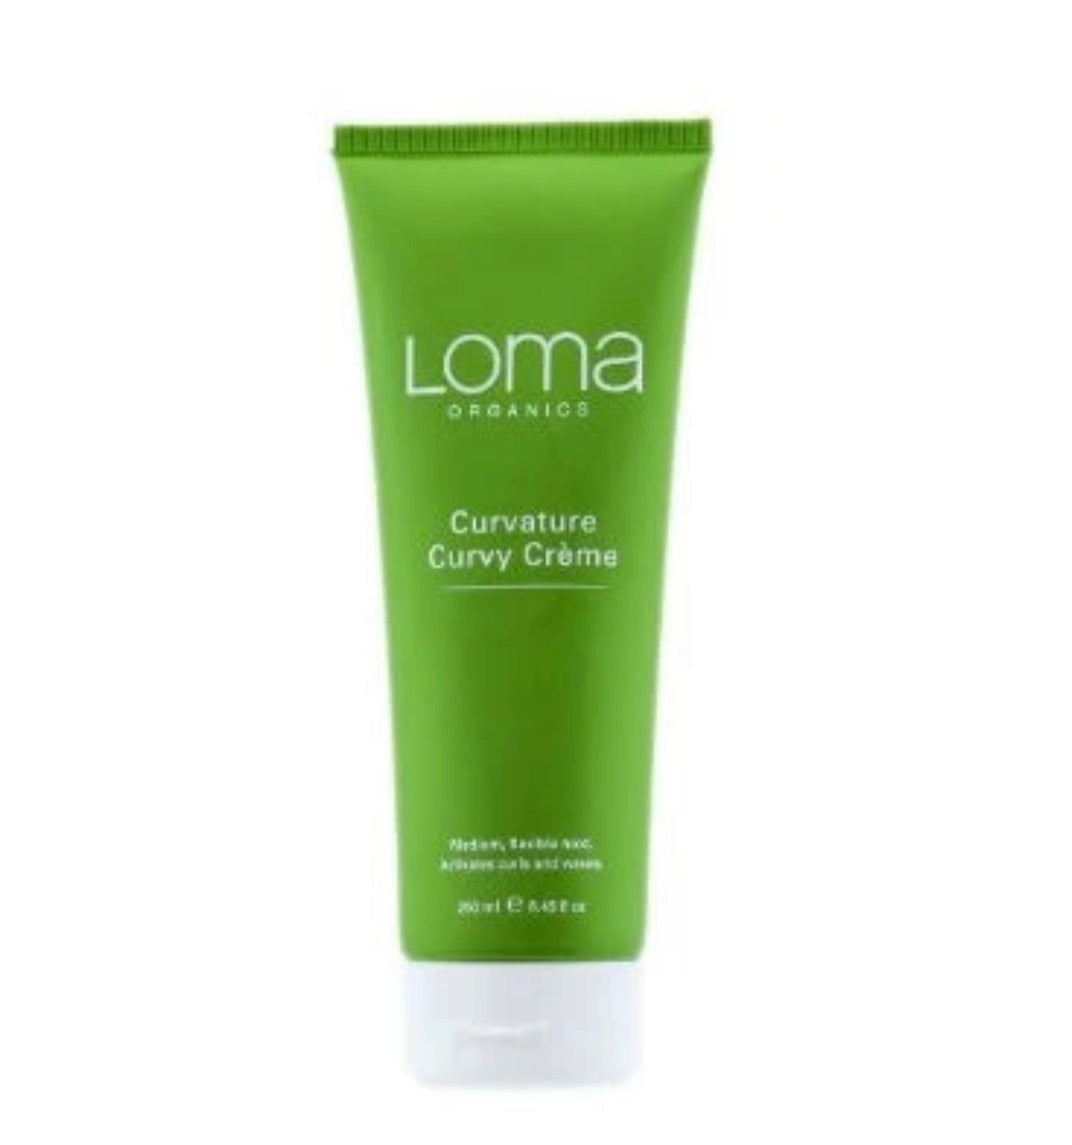 Loma - Curvy Creme